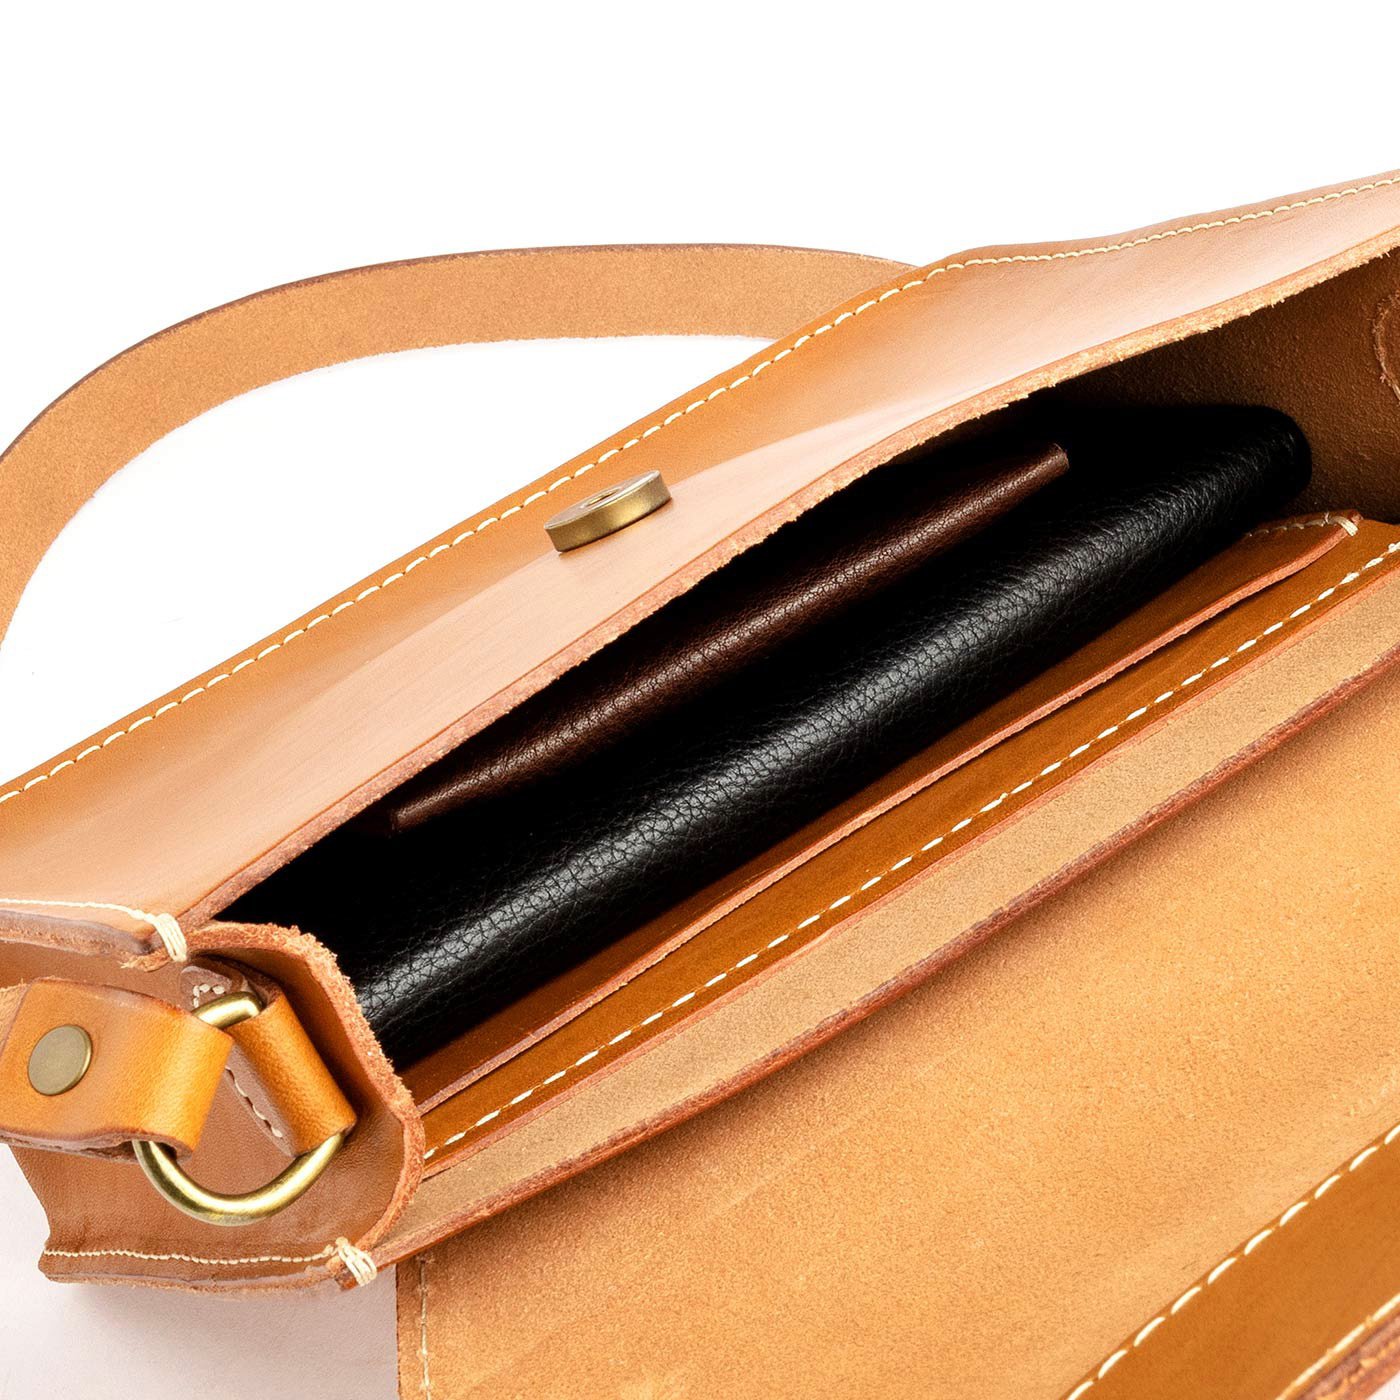 JW PEI Handbags On Sale Up To 90% Off Retail